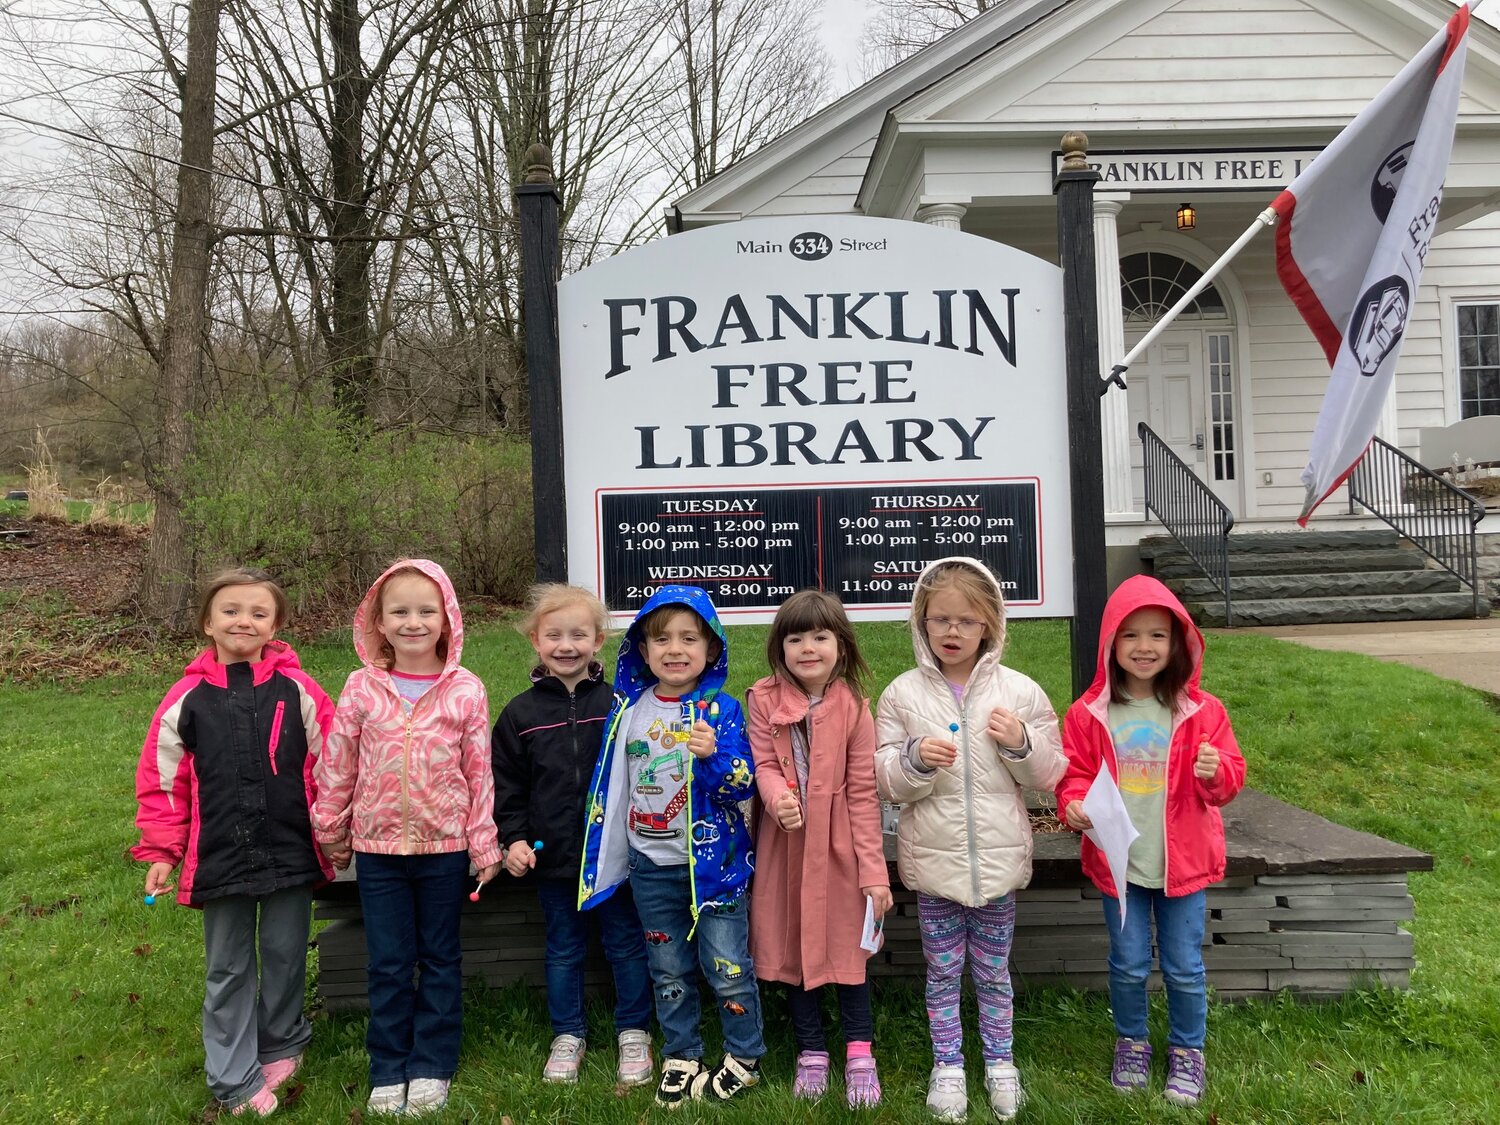 Franklin prekindergarten students visited the Franklin Free Library last week.